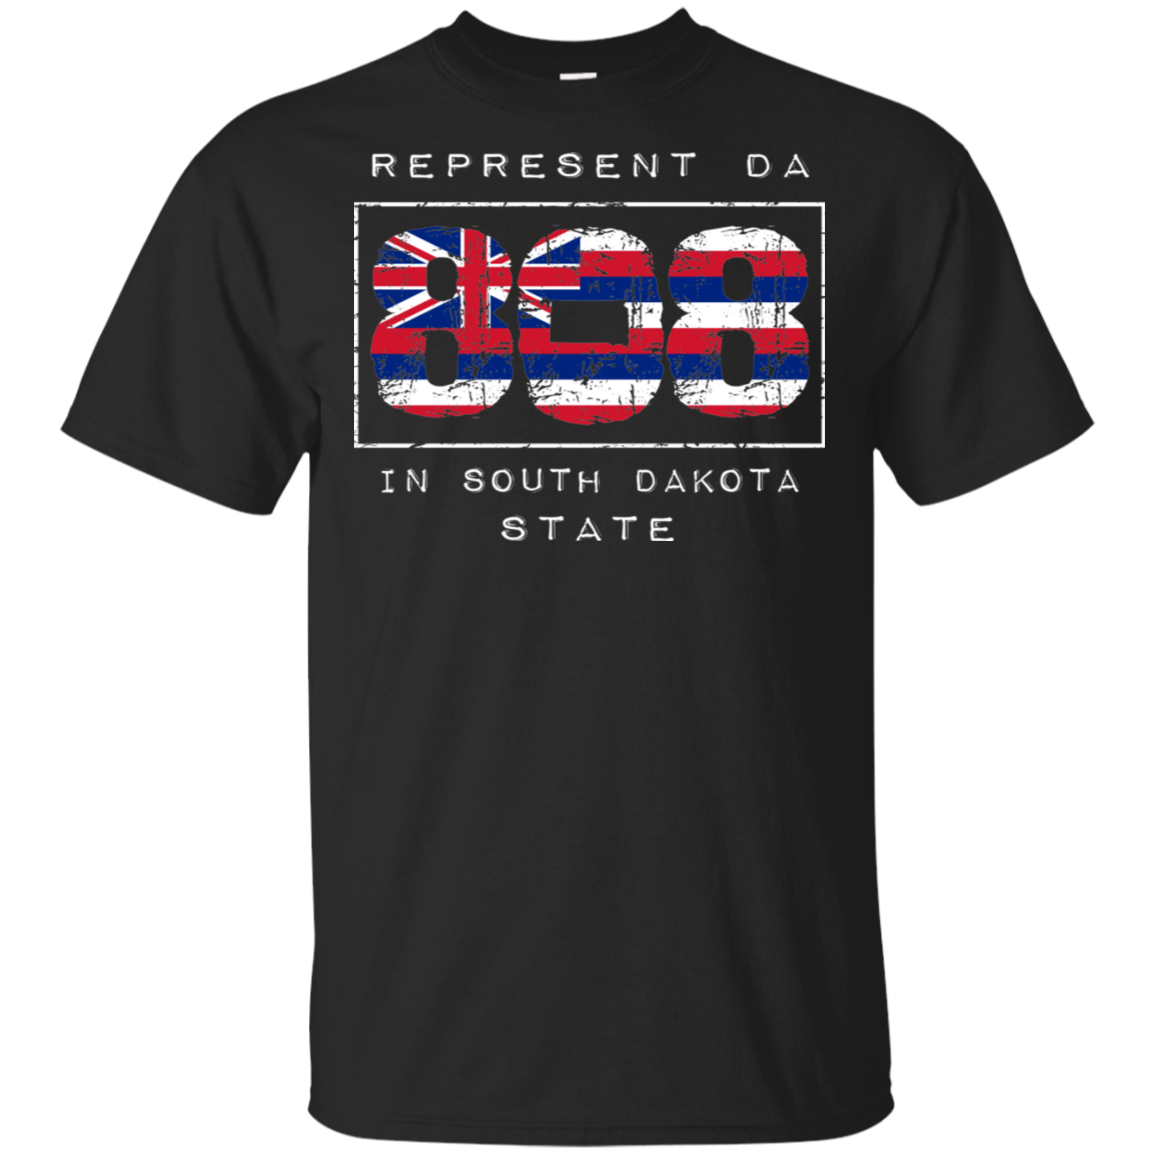 Rep Da 808 In South Dakota State Ultra Cotton T-Shirt, T-Shirts, Hawaii Nei All Day